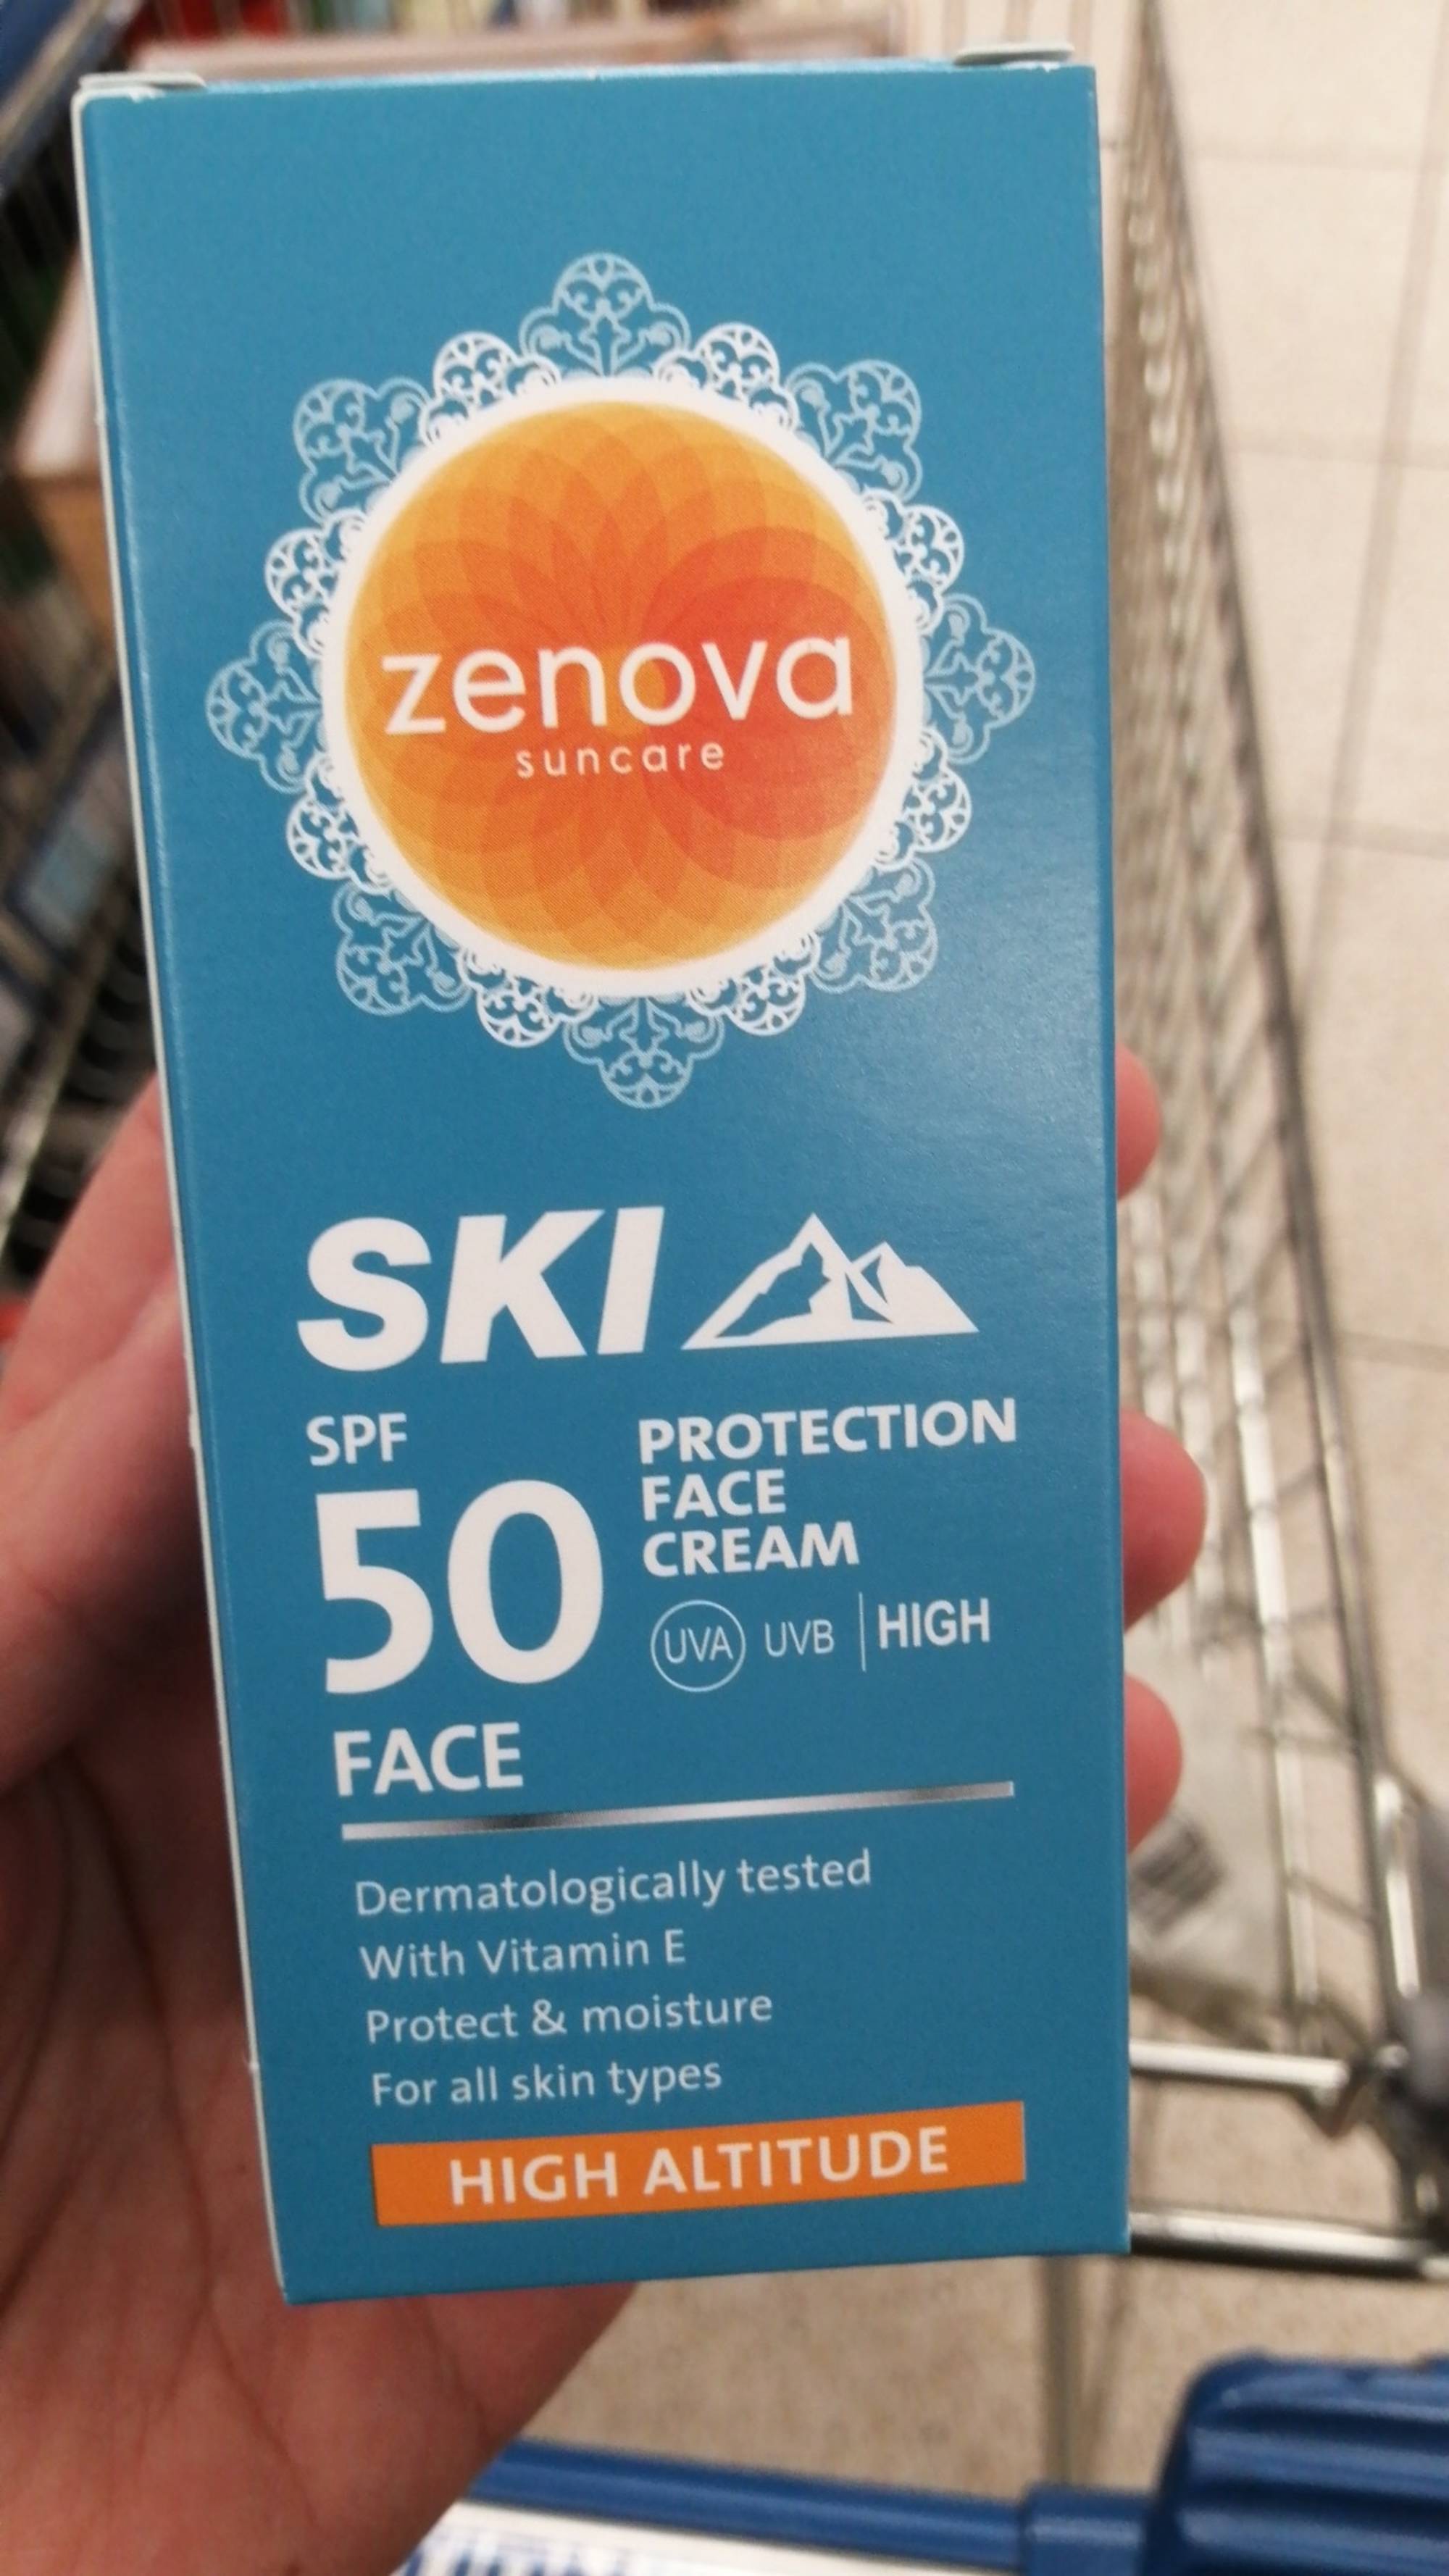 ZENOVA - Suncare - Ski protection face cream SPF 50